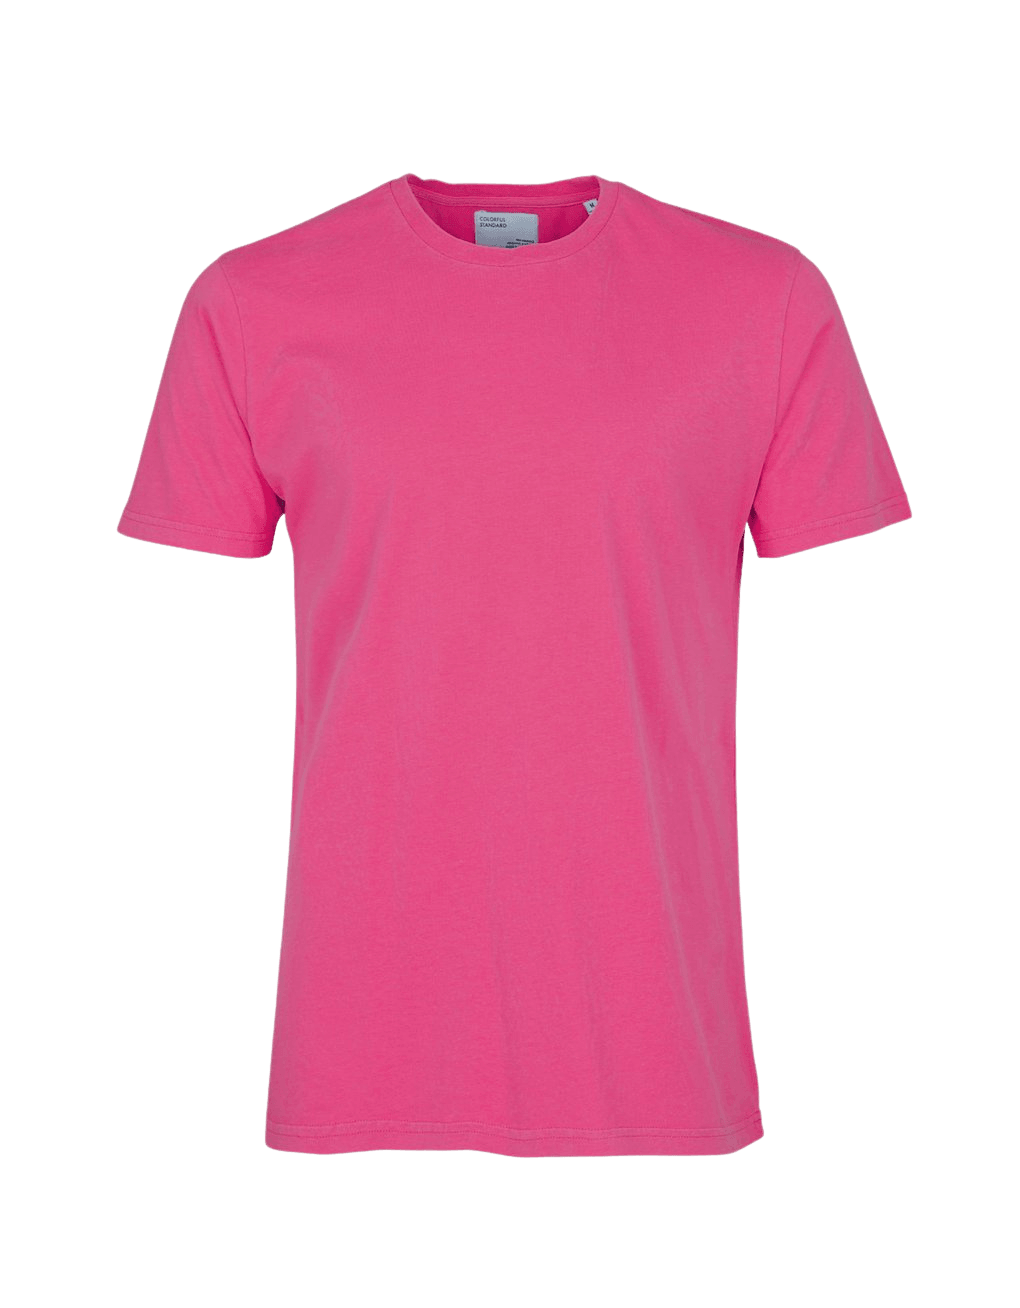 Camiseta Colorful Standard de Algodón Orgánico Rosa Chicle